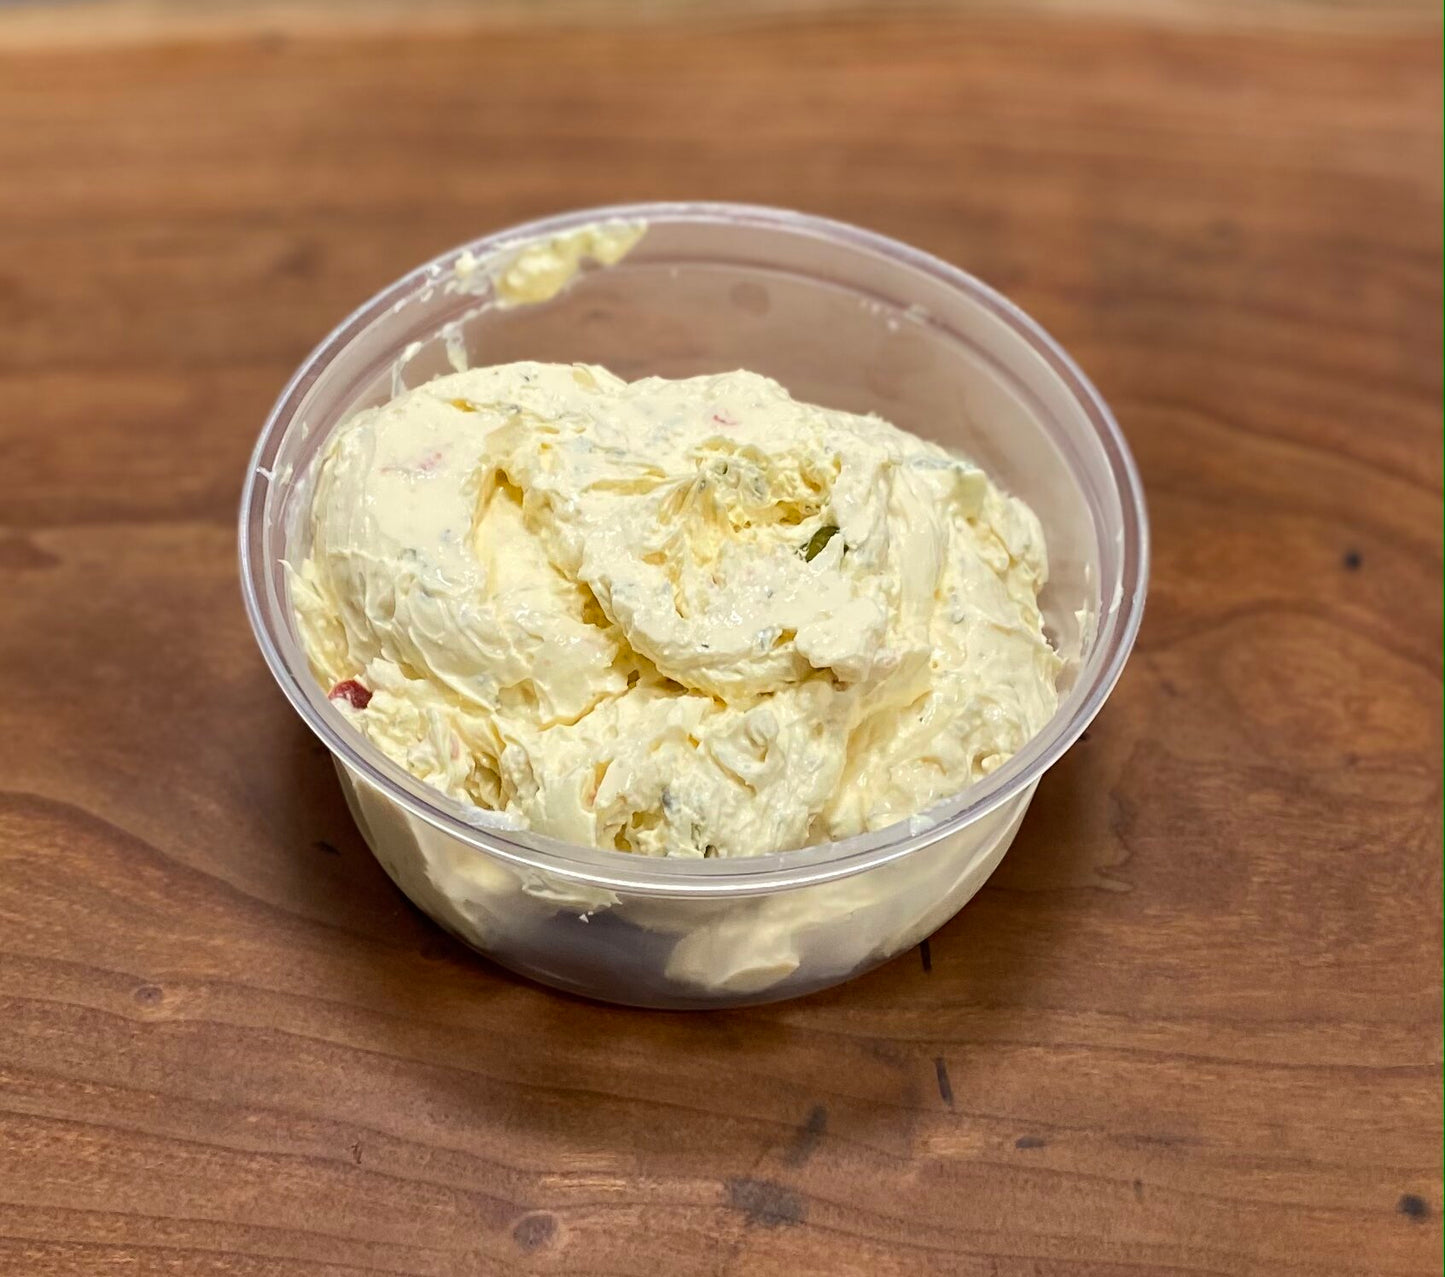 Vegetable Cream Cheese Spread (8 oz.)